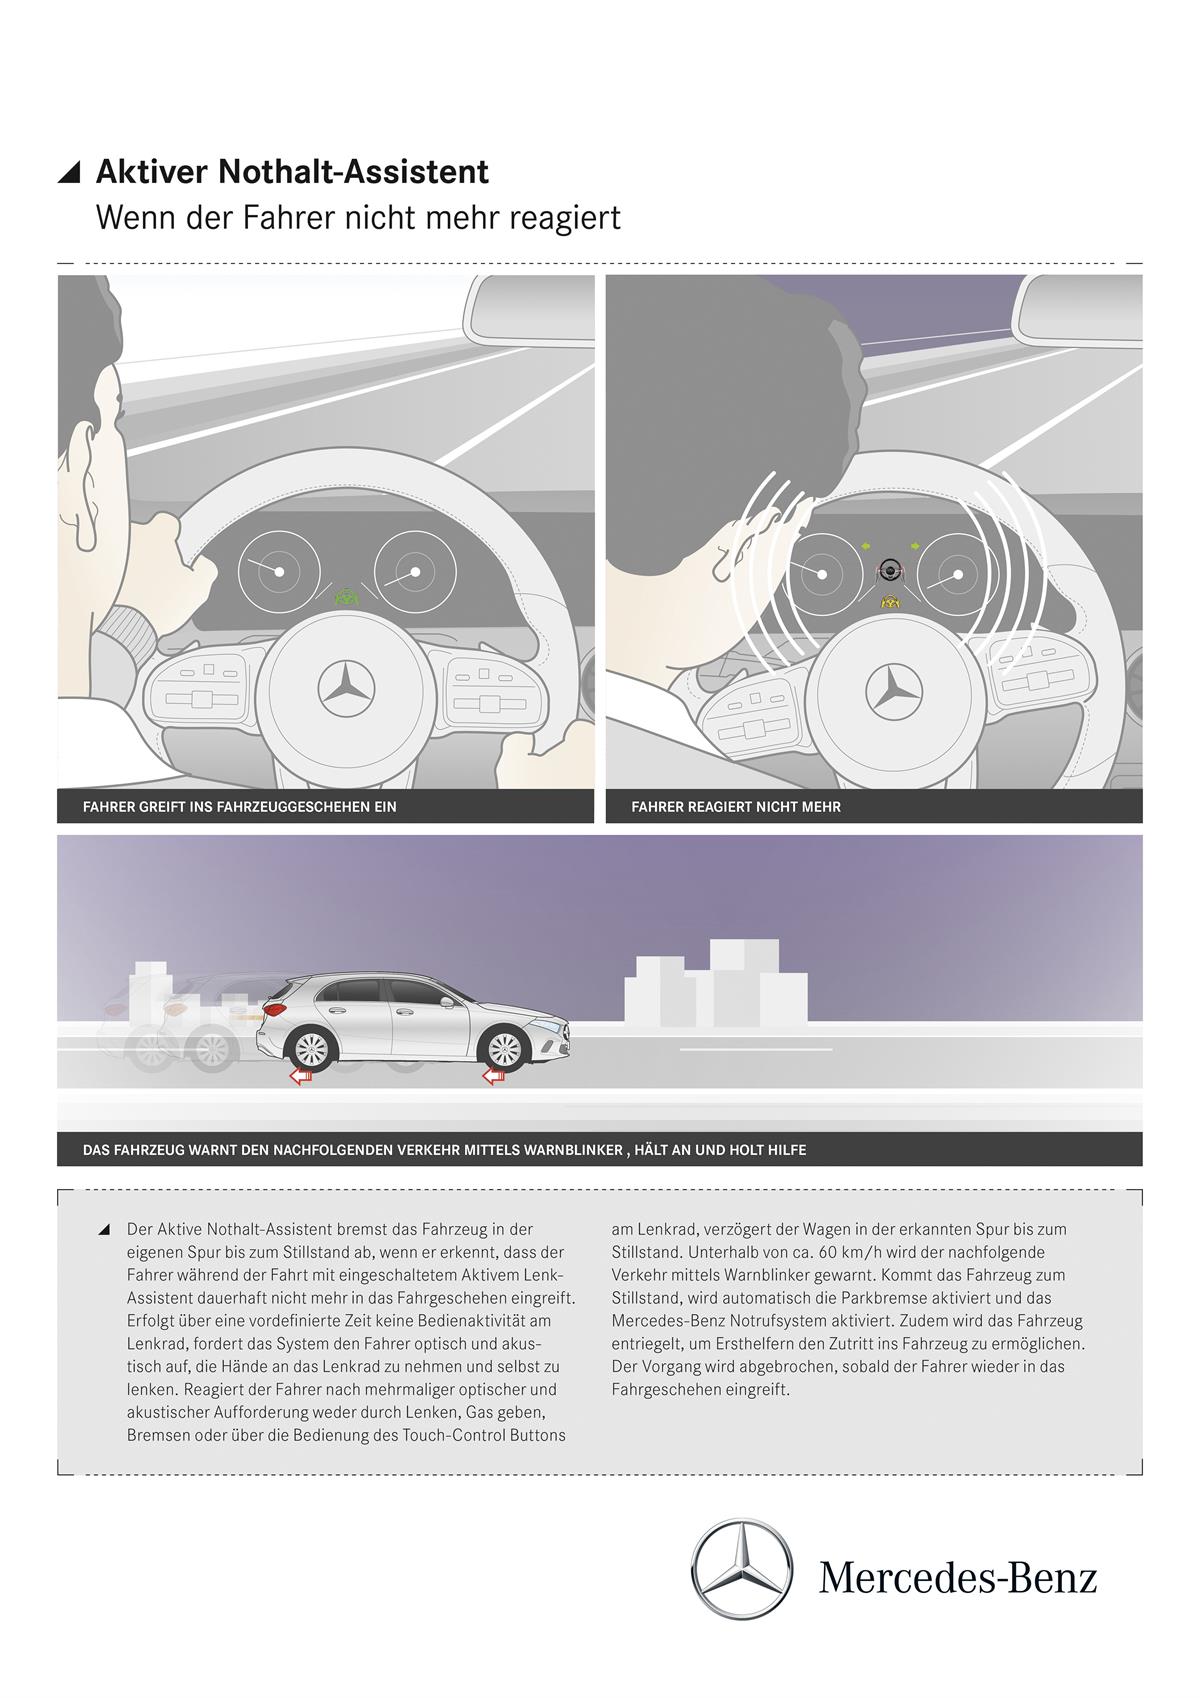 Mercedes-Benz Intelligent Drive: Nothalt-Assistent